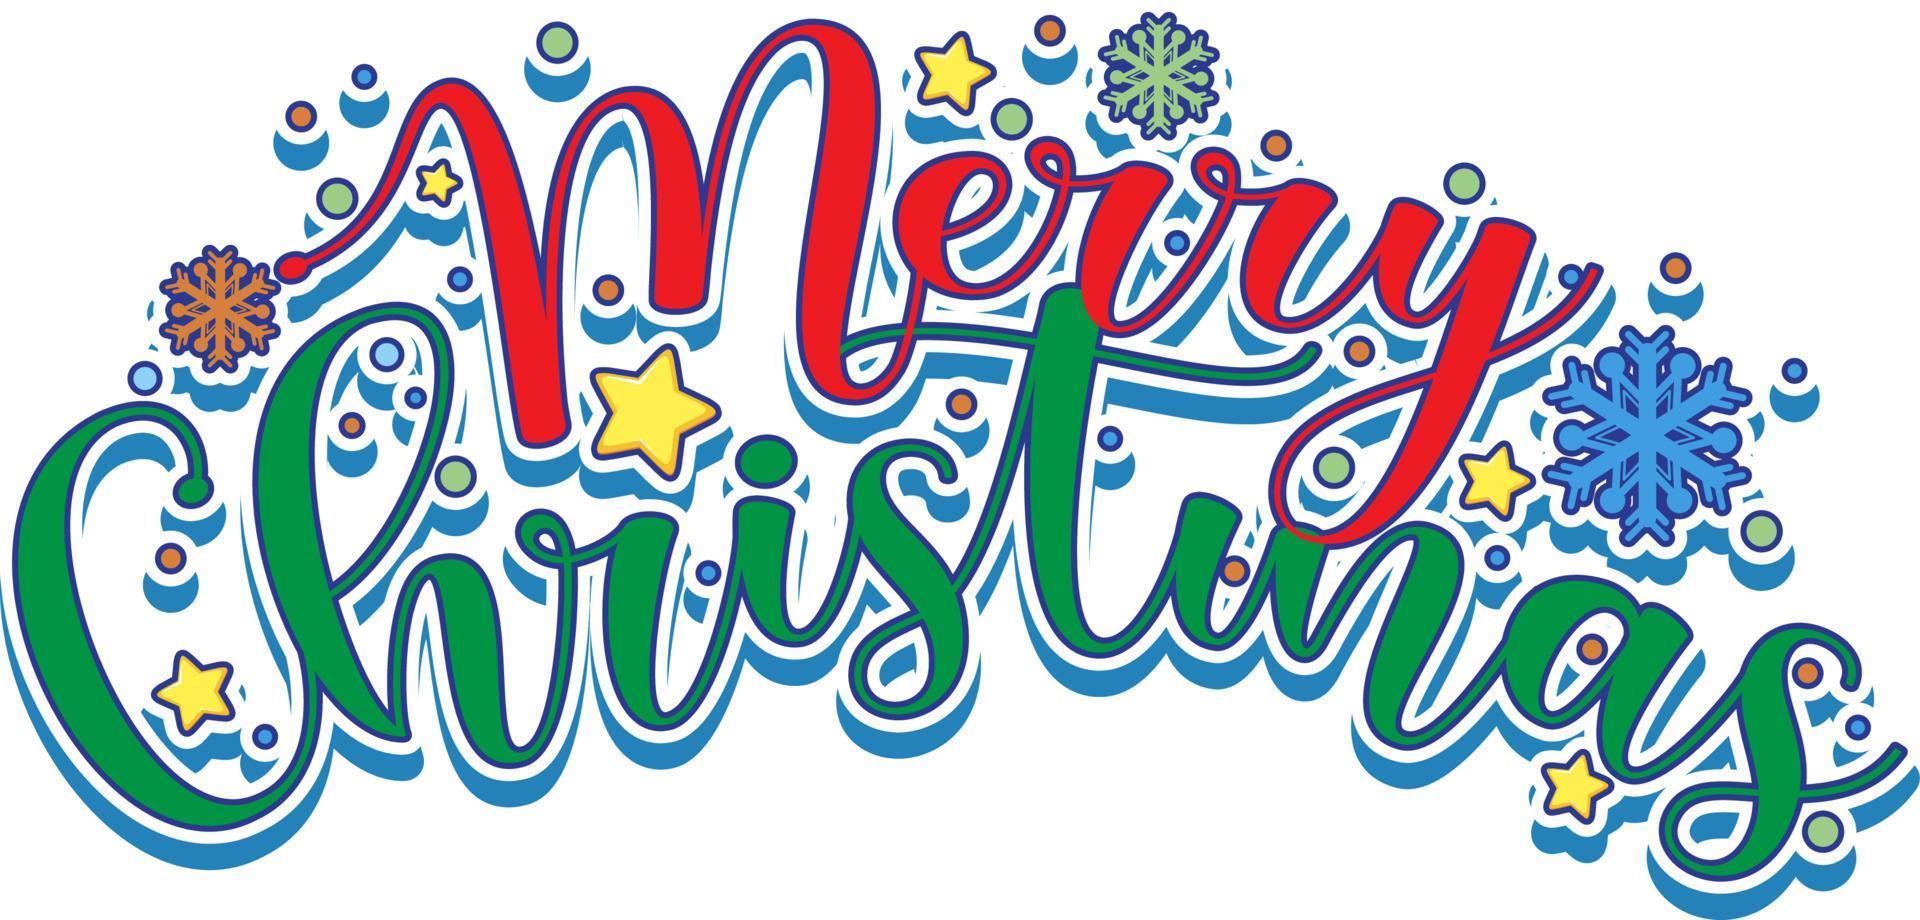 Merry Christmas lettering design on white background vector